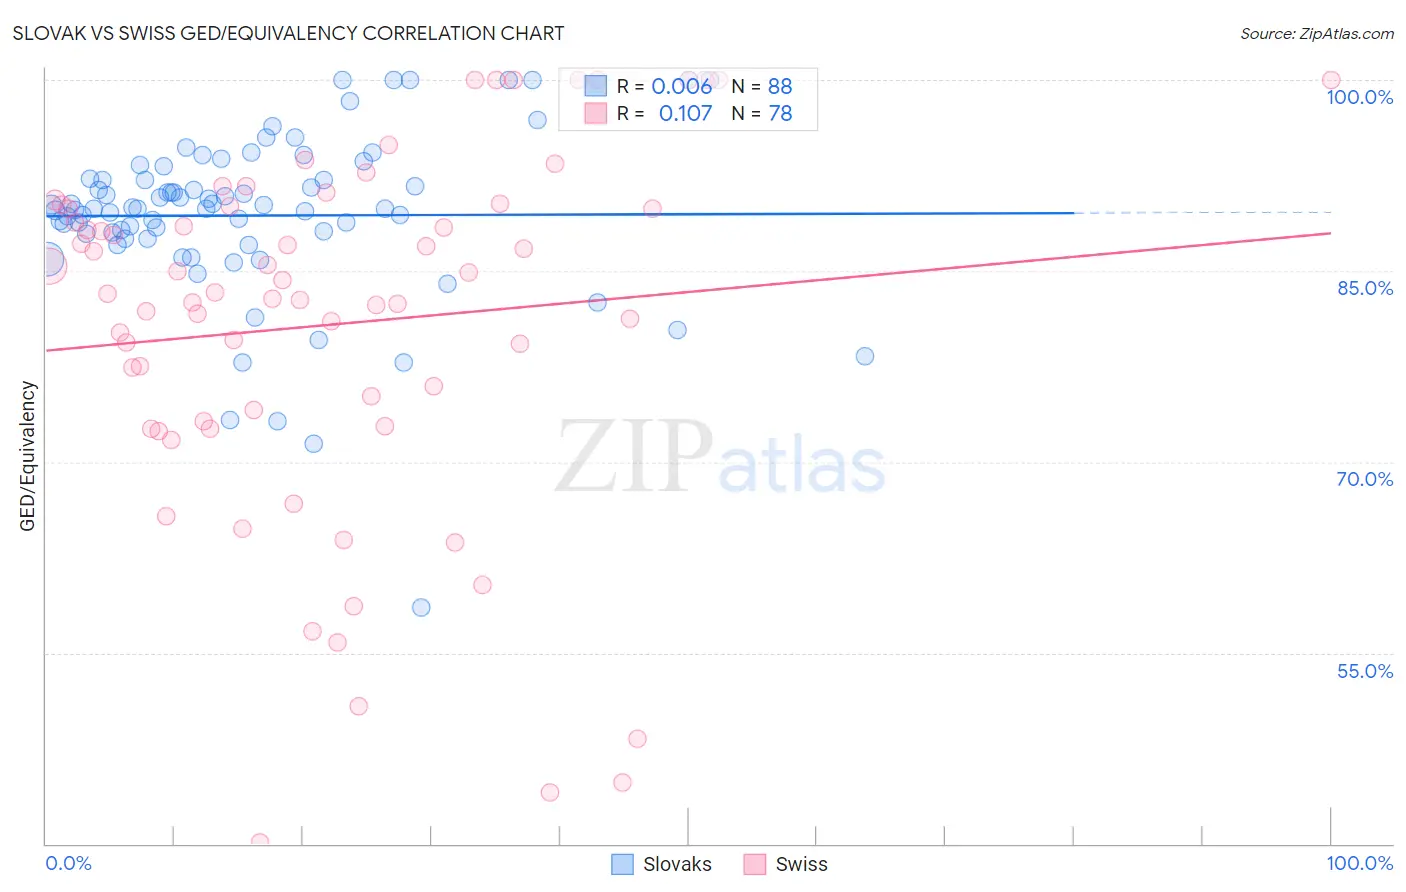 Slovak vs Swiss GED/Equivalency